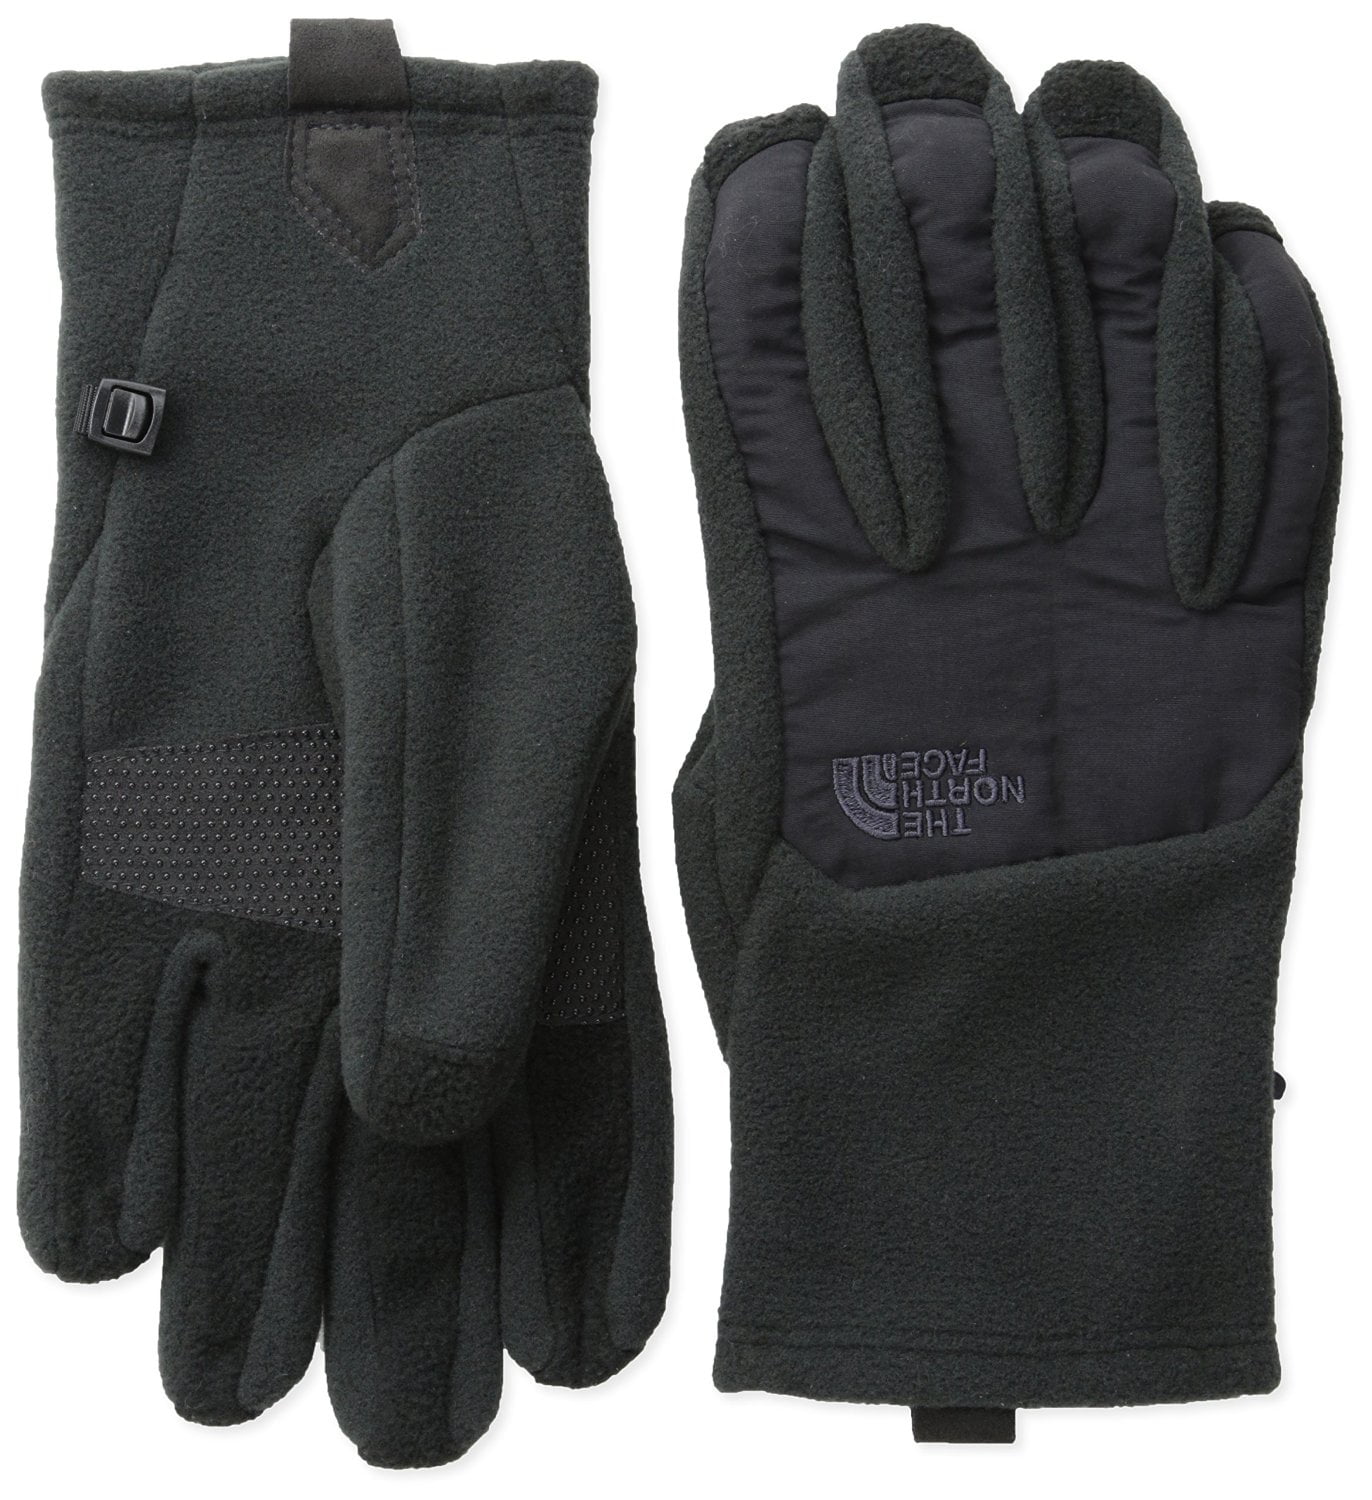 Men's Denali Glove TNF Black XL - Walmart.com